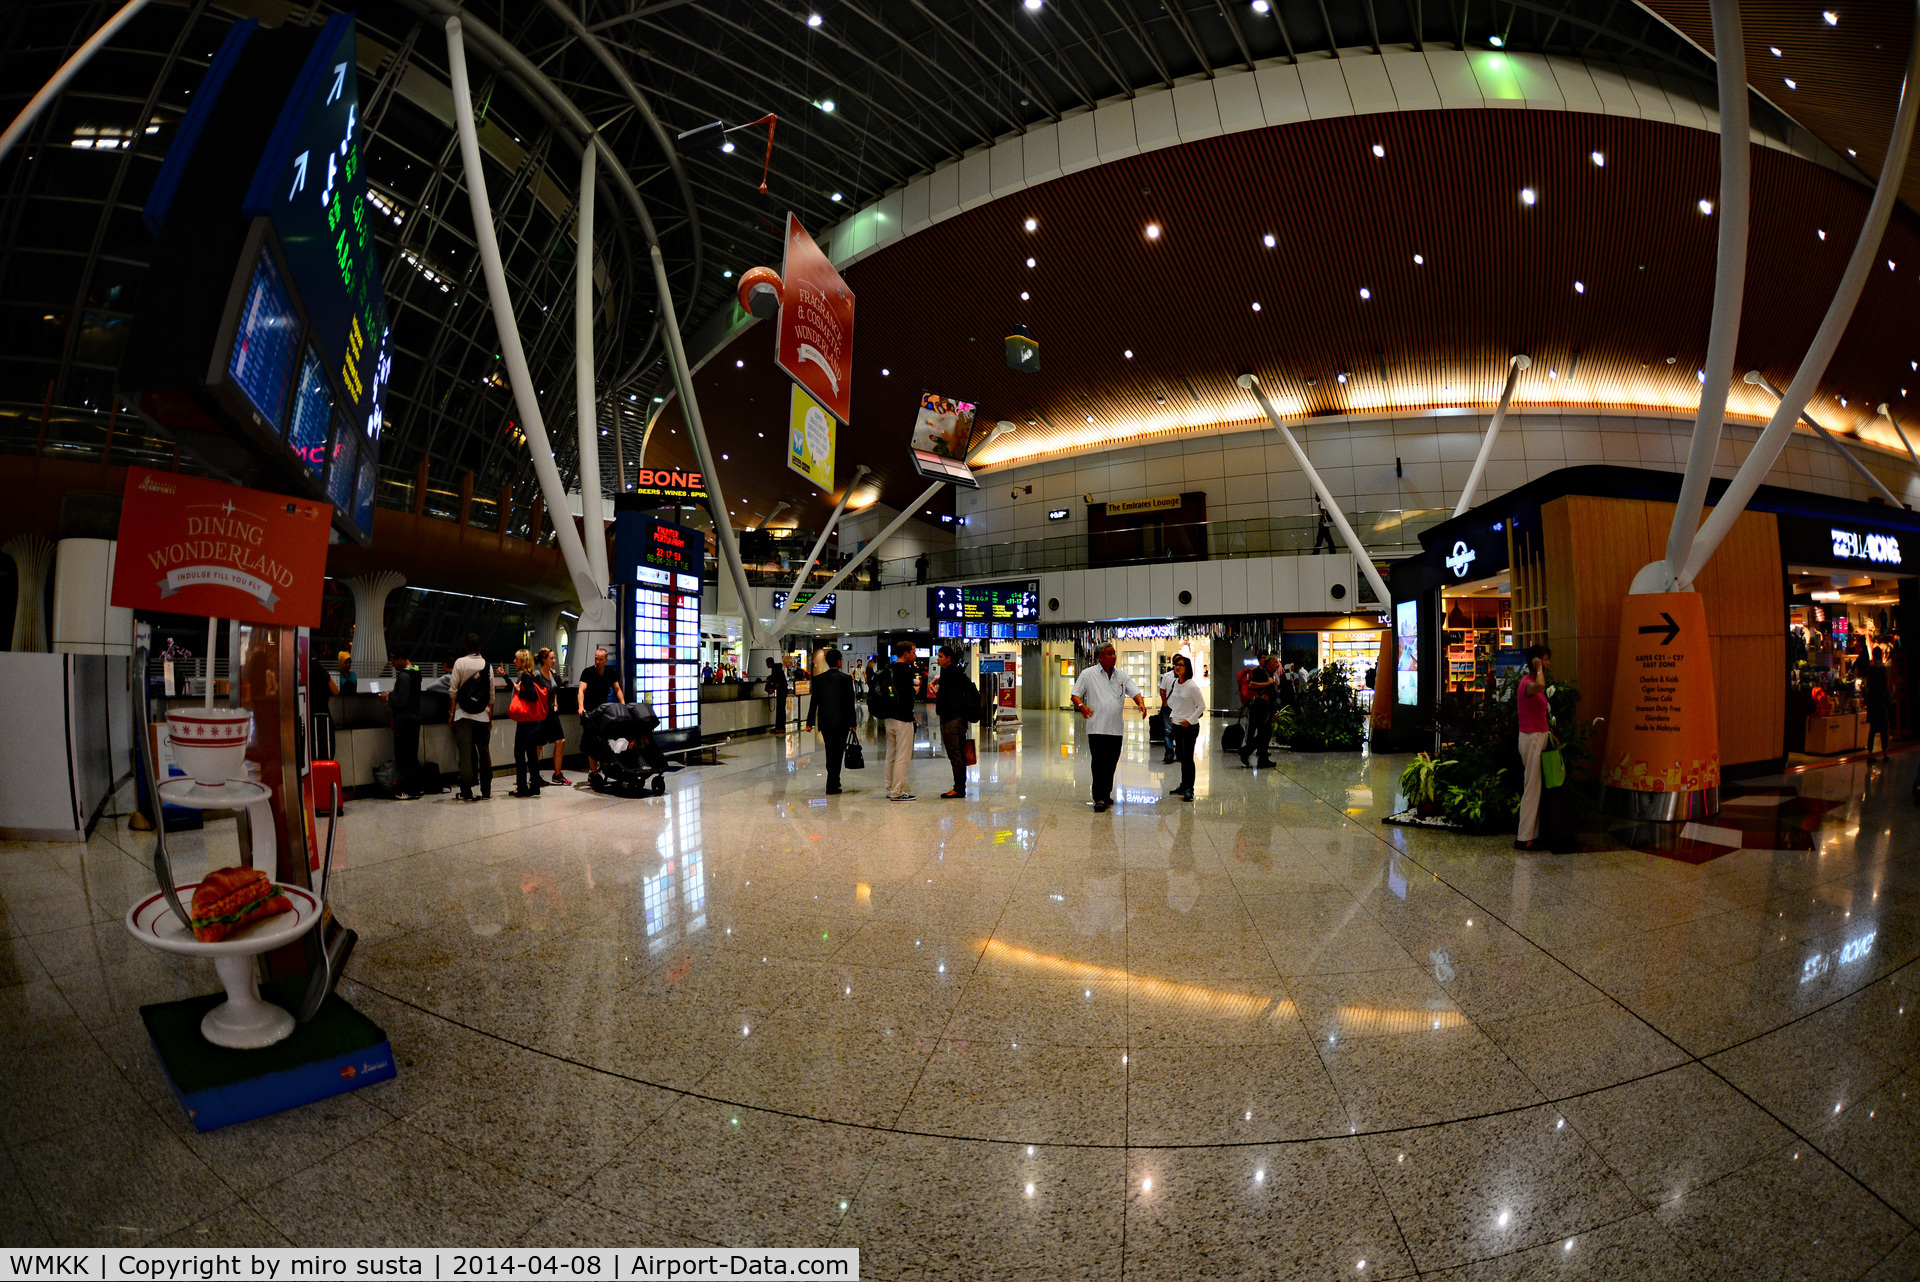 Kuala Lumpur International Airport, Sepang, Selangor Malaysia (WMKK) - Kuala Lumpur International Airport (KLIA)